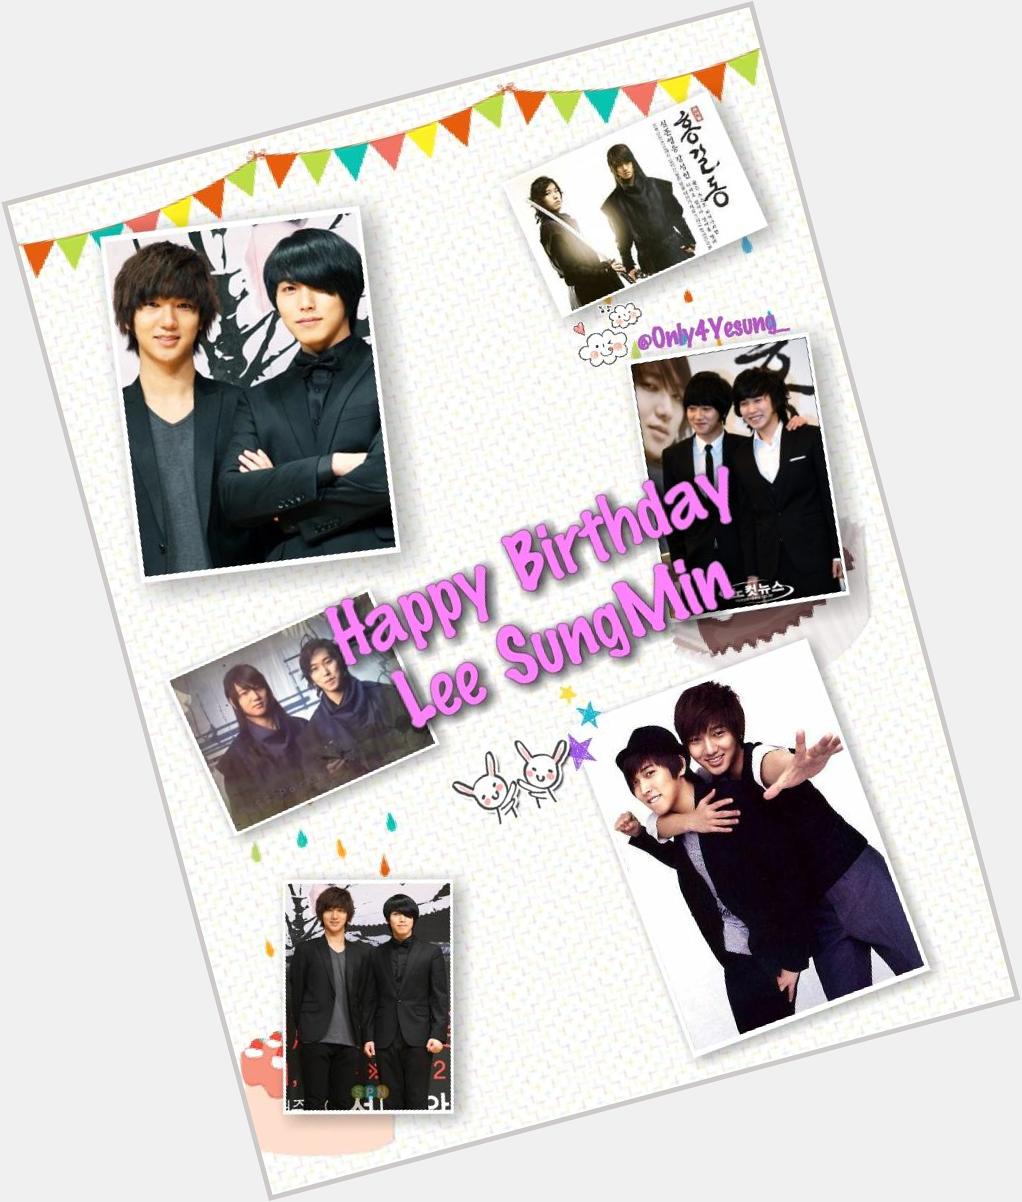 \"  HAPPY BIRTHDAY  ¡Feliz Cumpleaños Lee SungMin! ^^

From: staff 